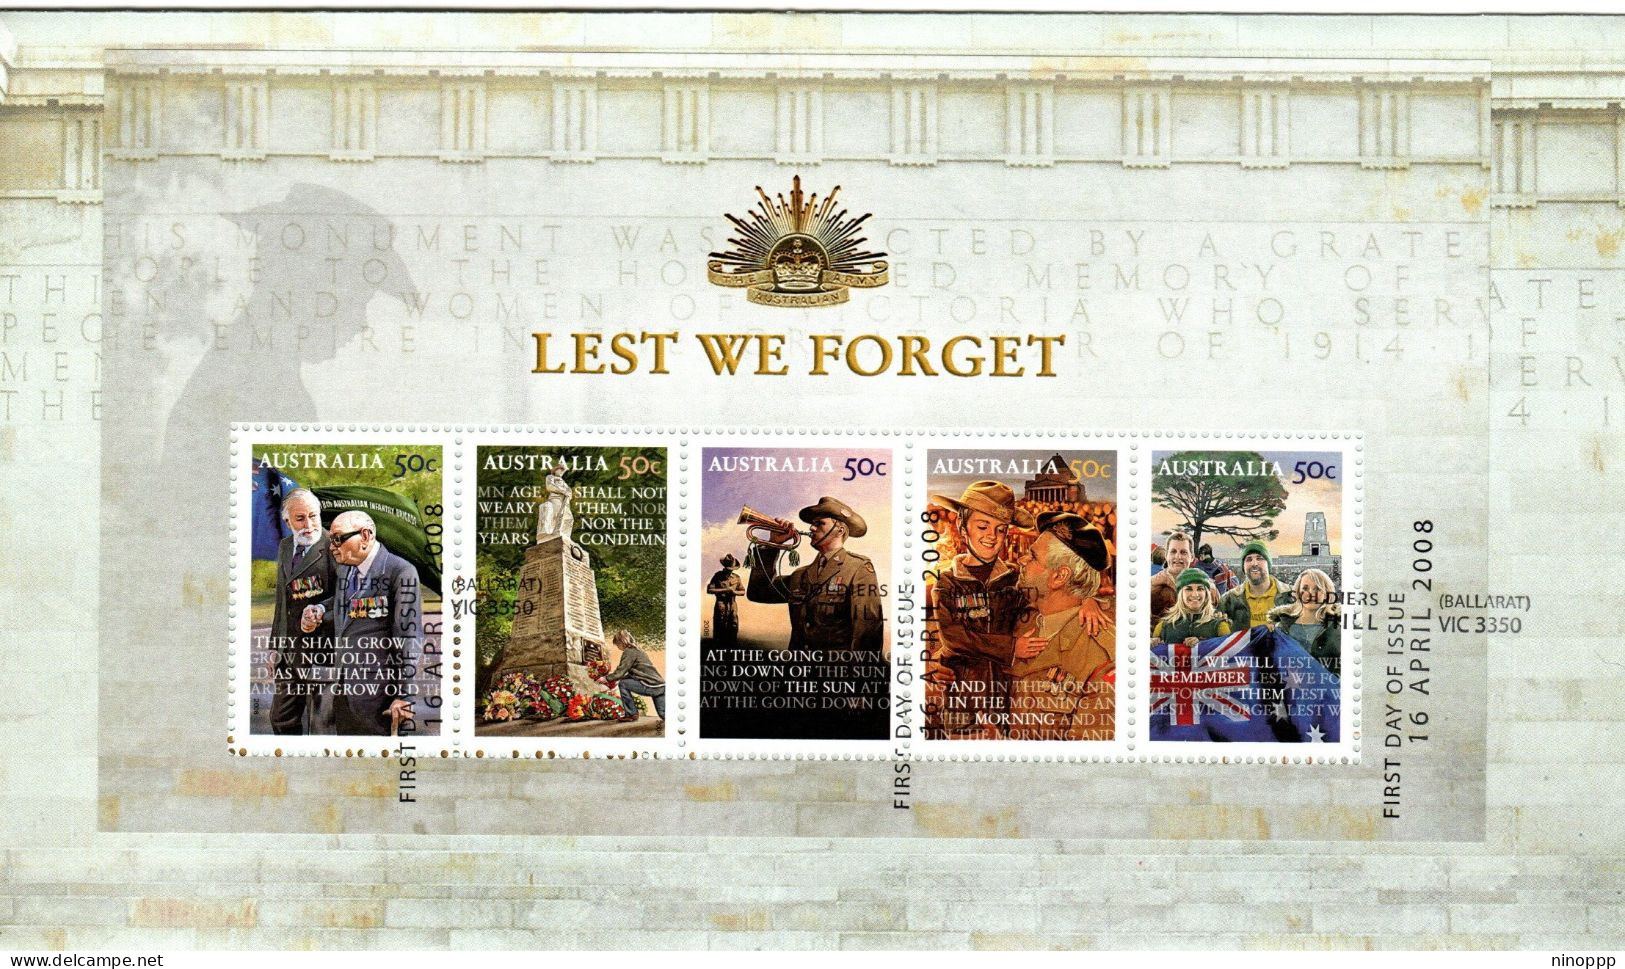 Australia 2008 Lest We Forget,Mini Sheet, Soldiers Hill Postmark,FDI - Postmark Collection